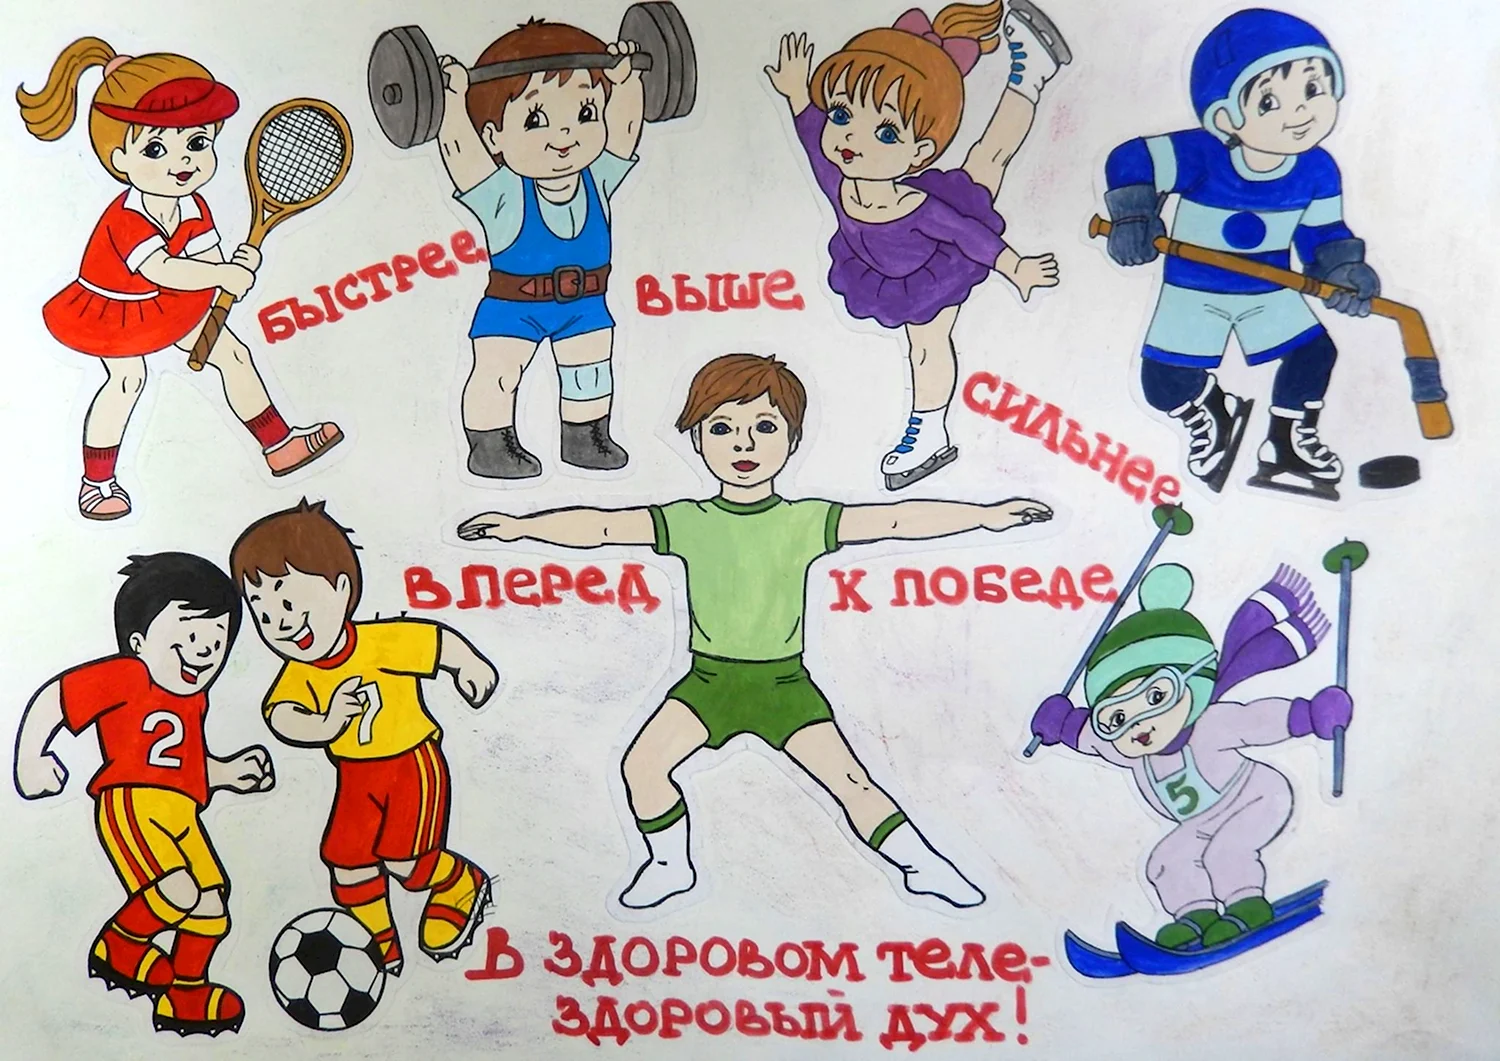 Sport poster design